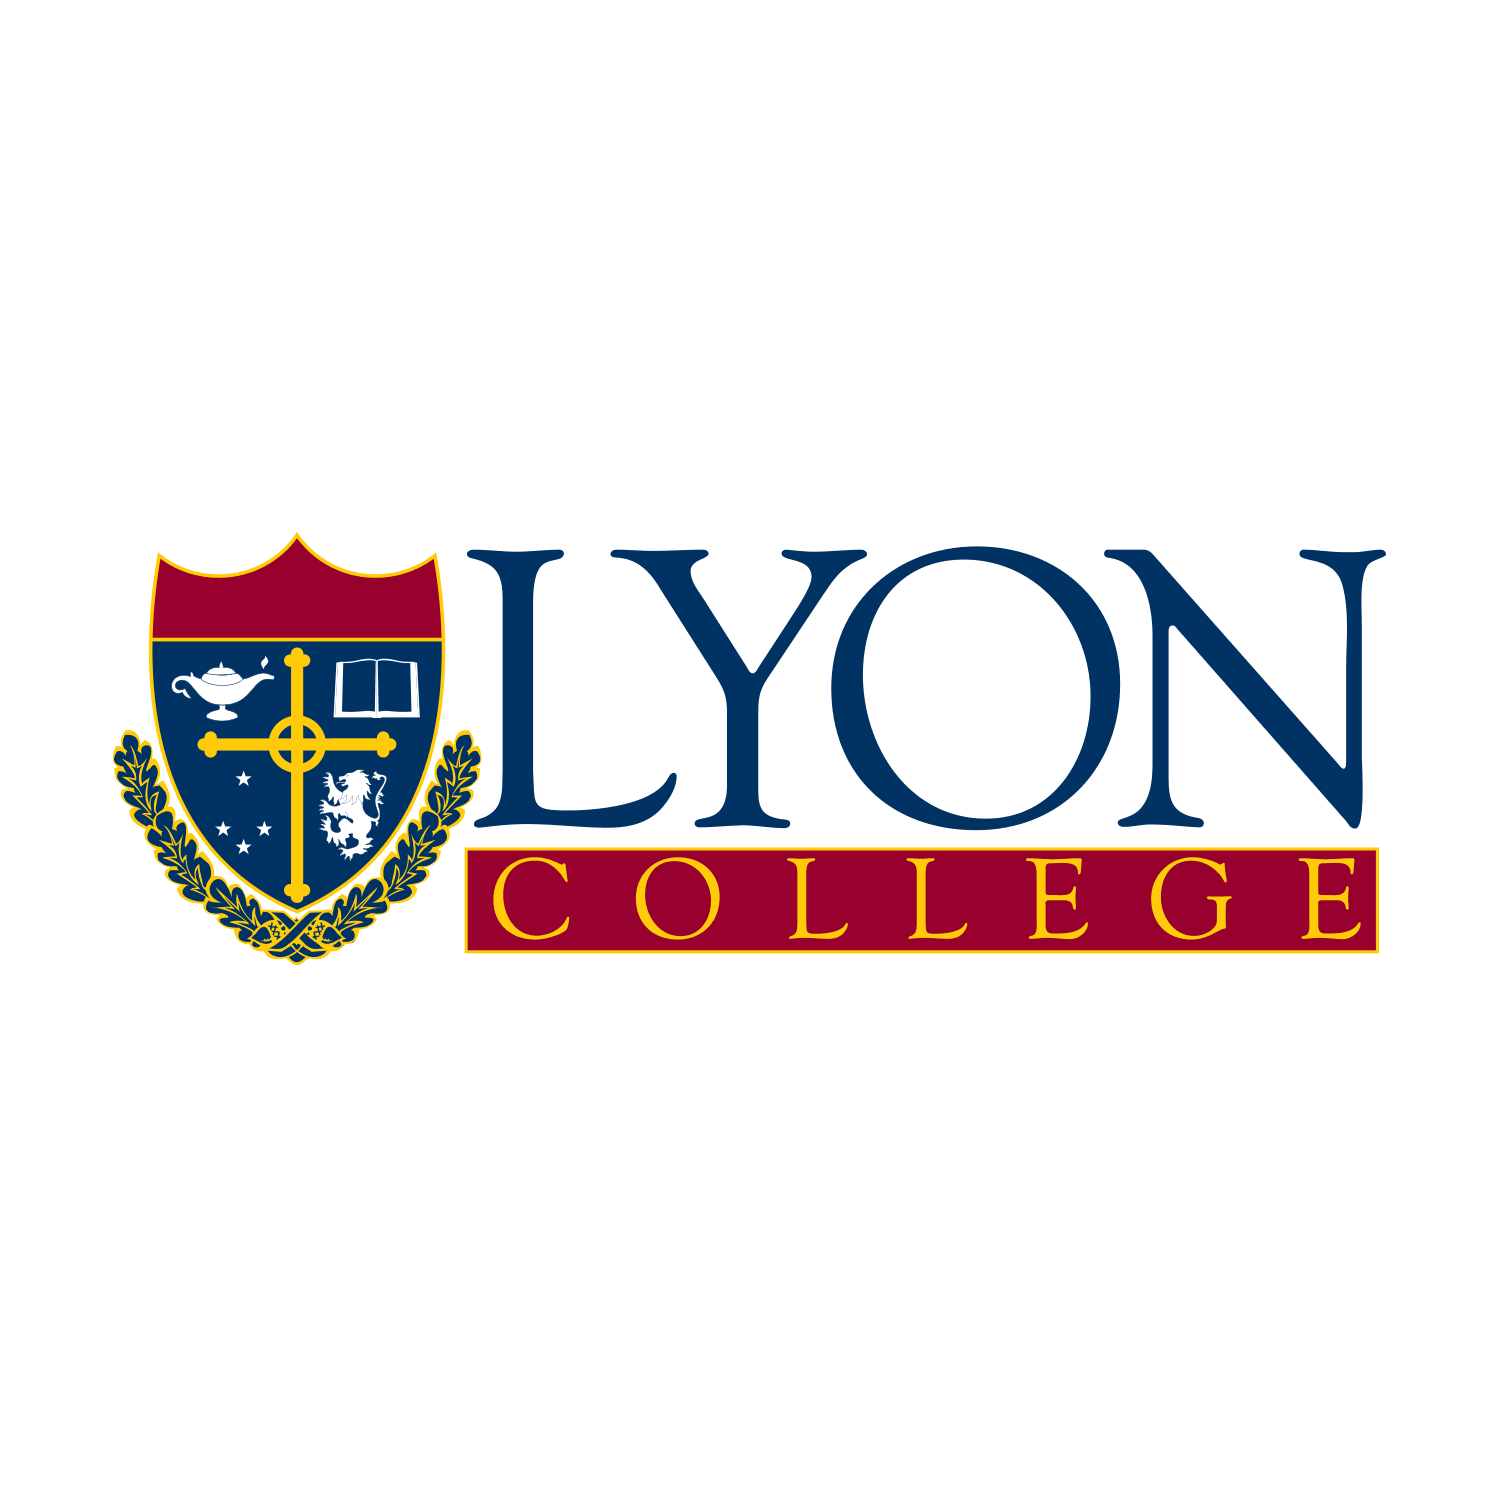 Lyon Logo - Lyon College: Liberal Arts College in Arkansas